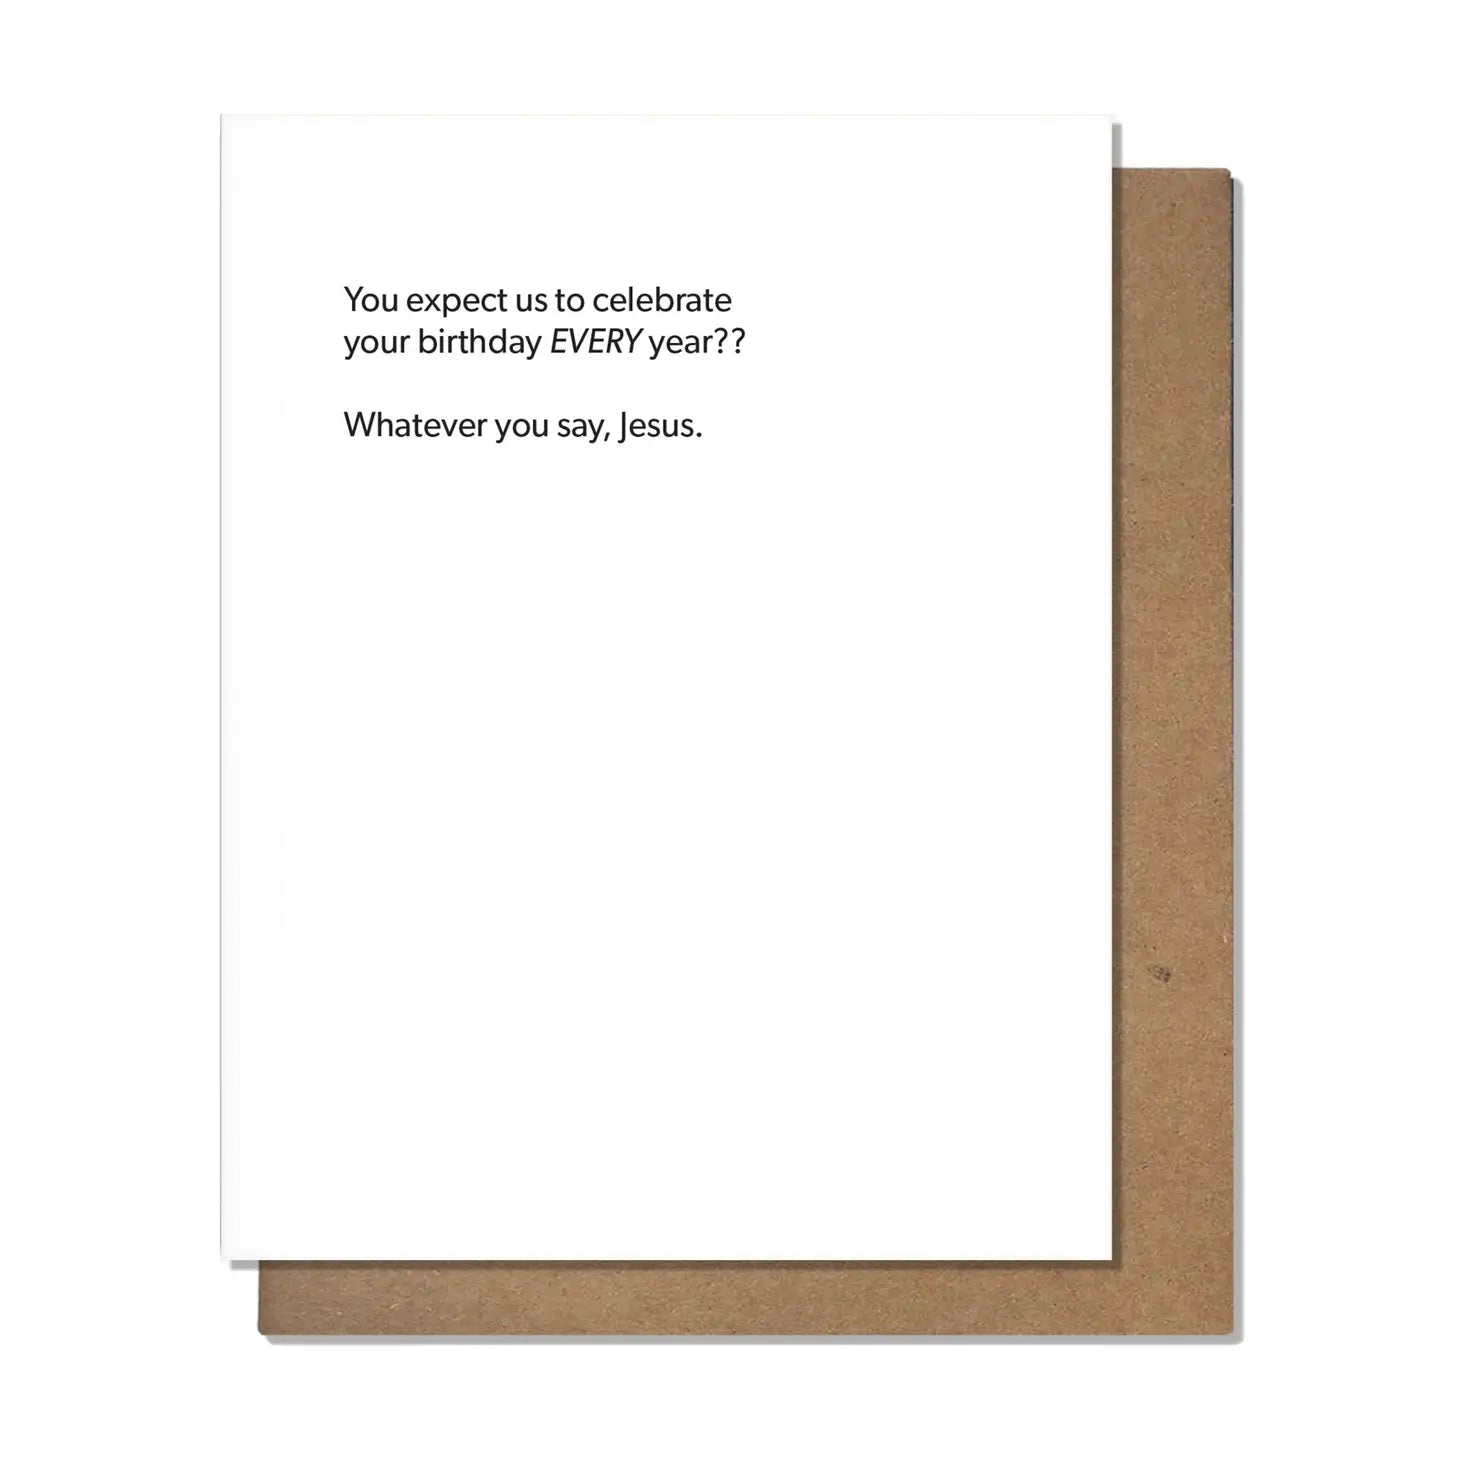 Whatever Jesus - Greeting Card